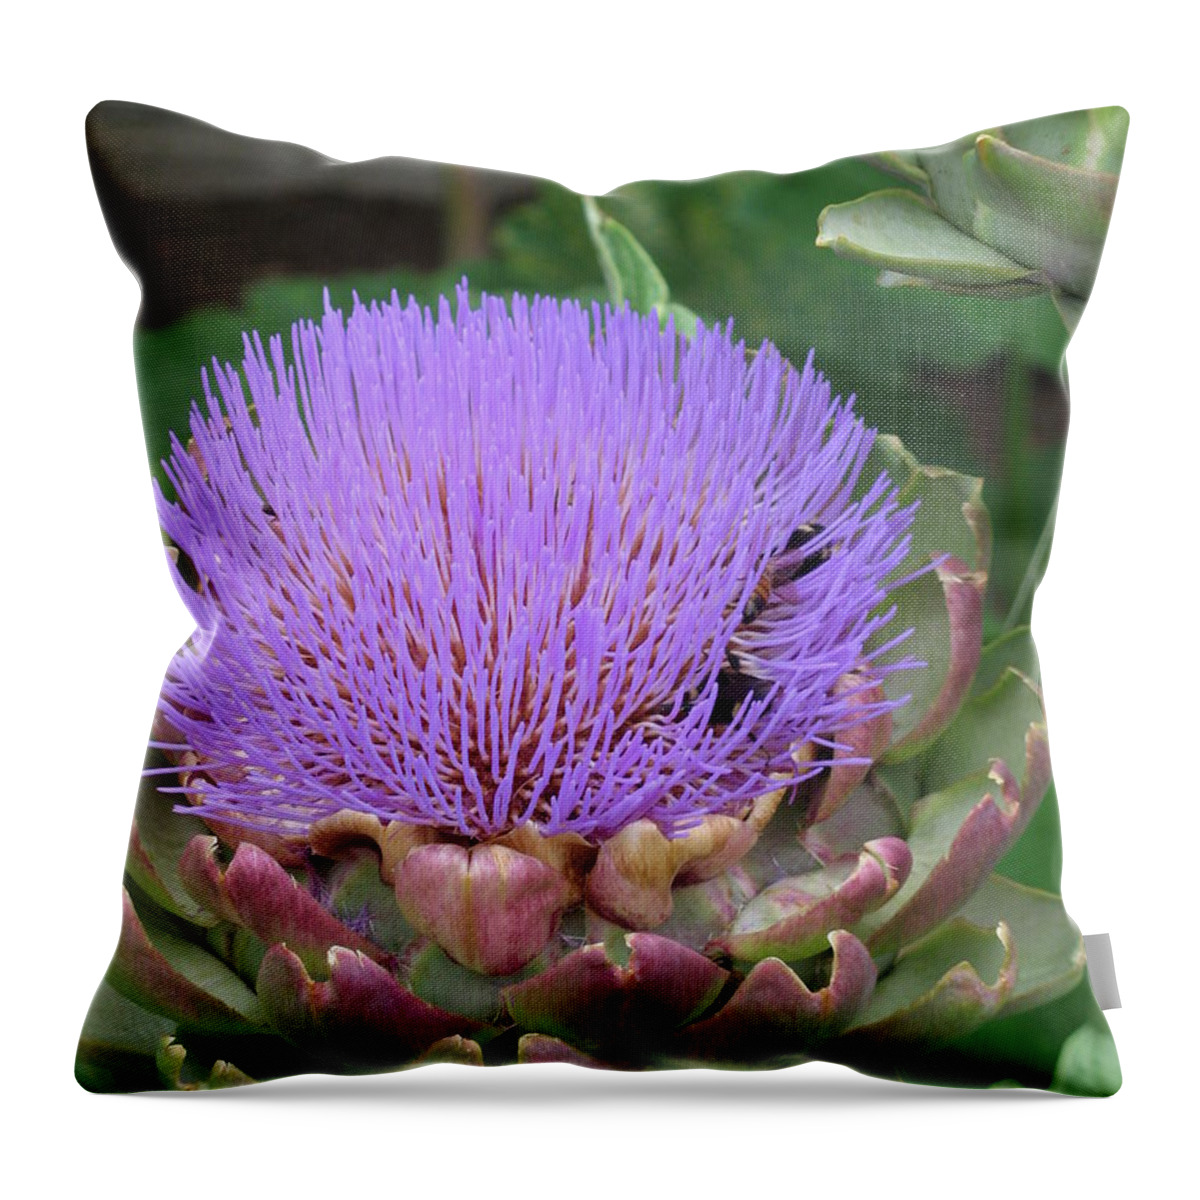 Artichoke Throw Pillow featuring the photograph Artichoke Purple by Mars Besso